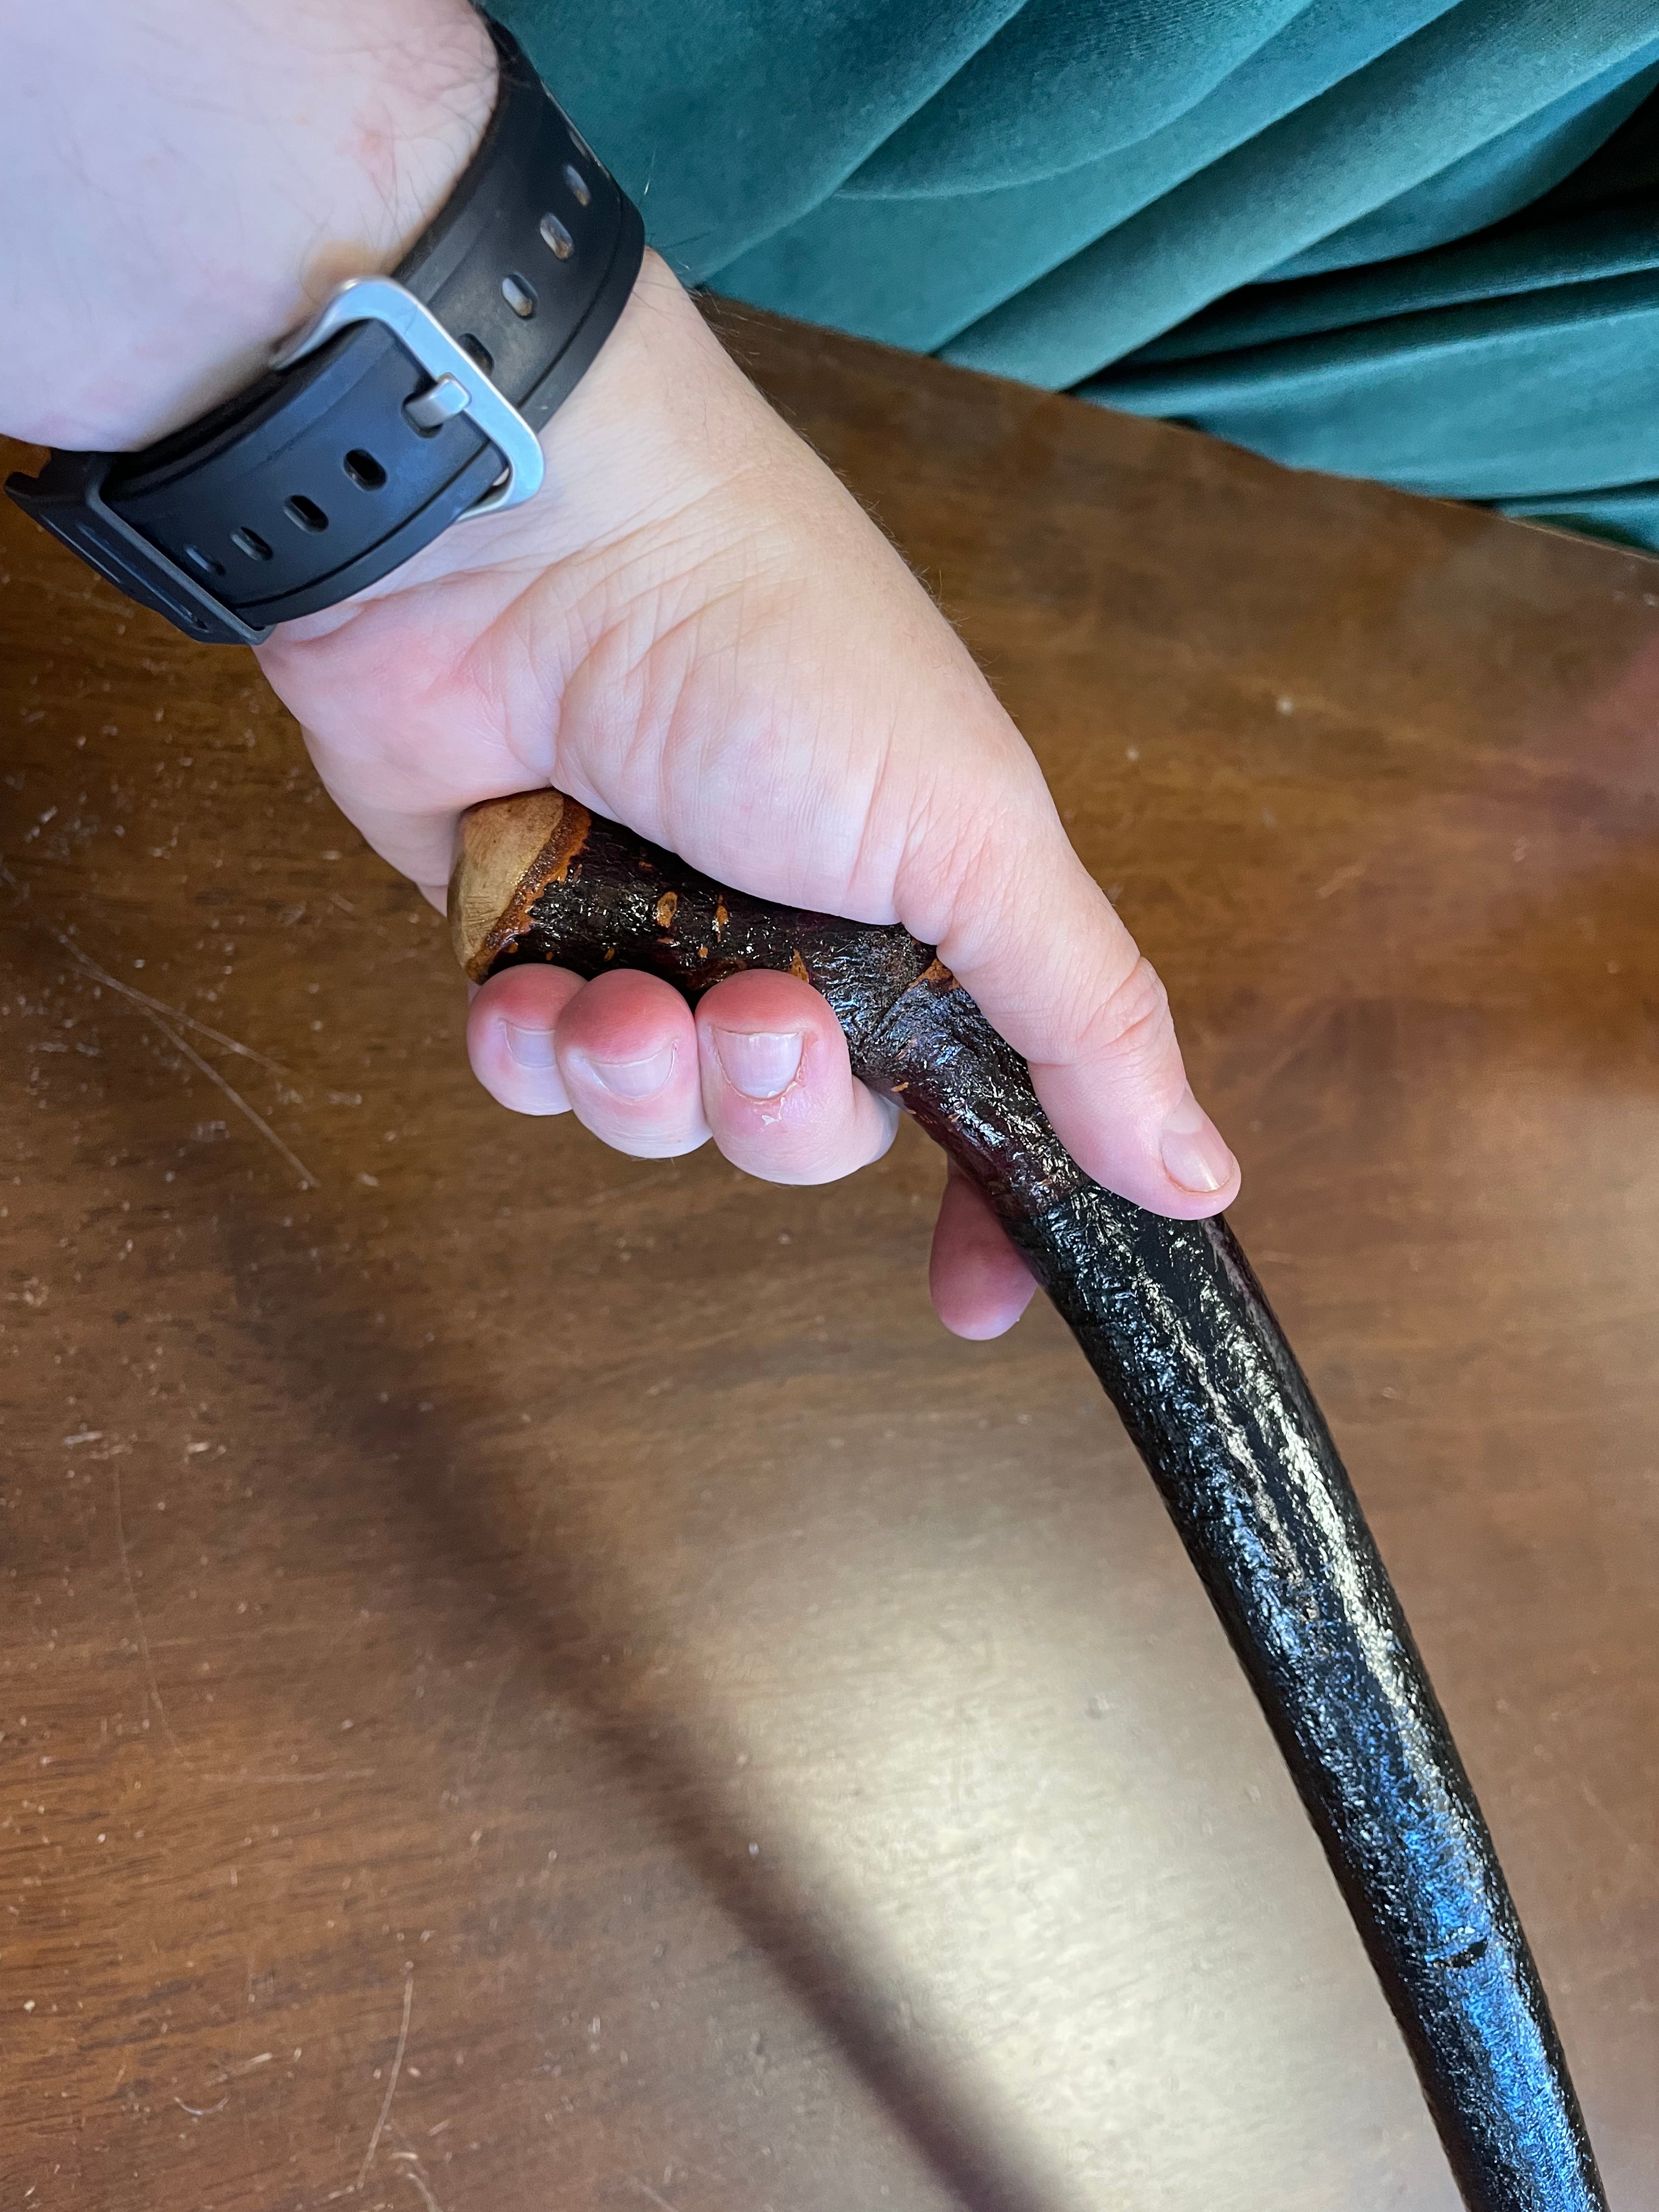 Blackthorn Walking Stick 36 inch - Handmade in Ireland